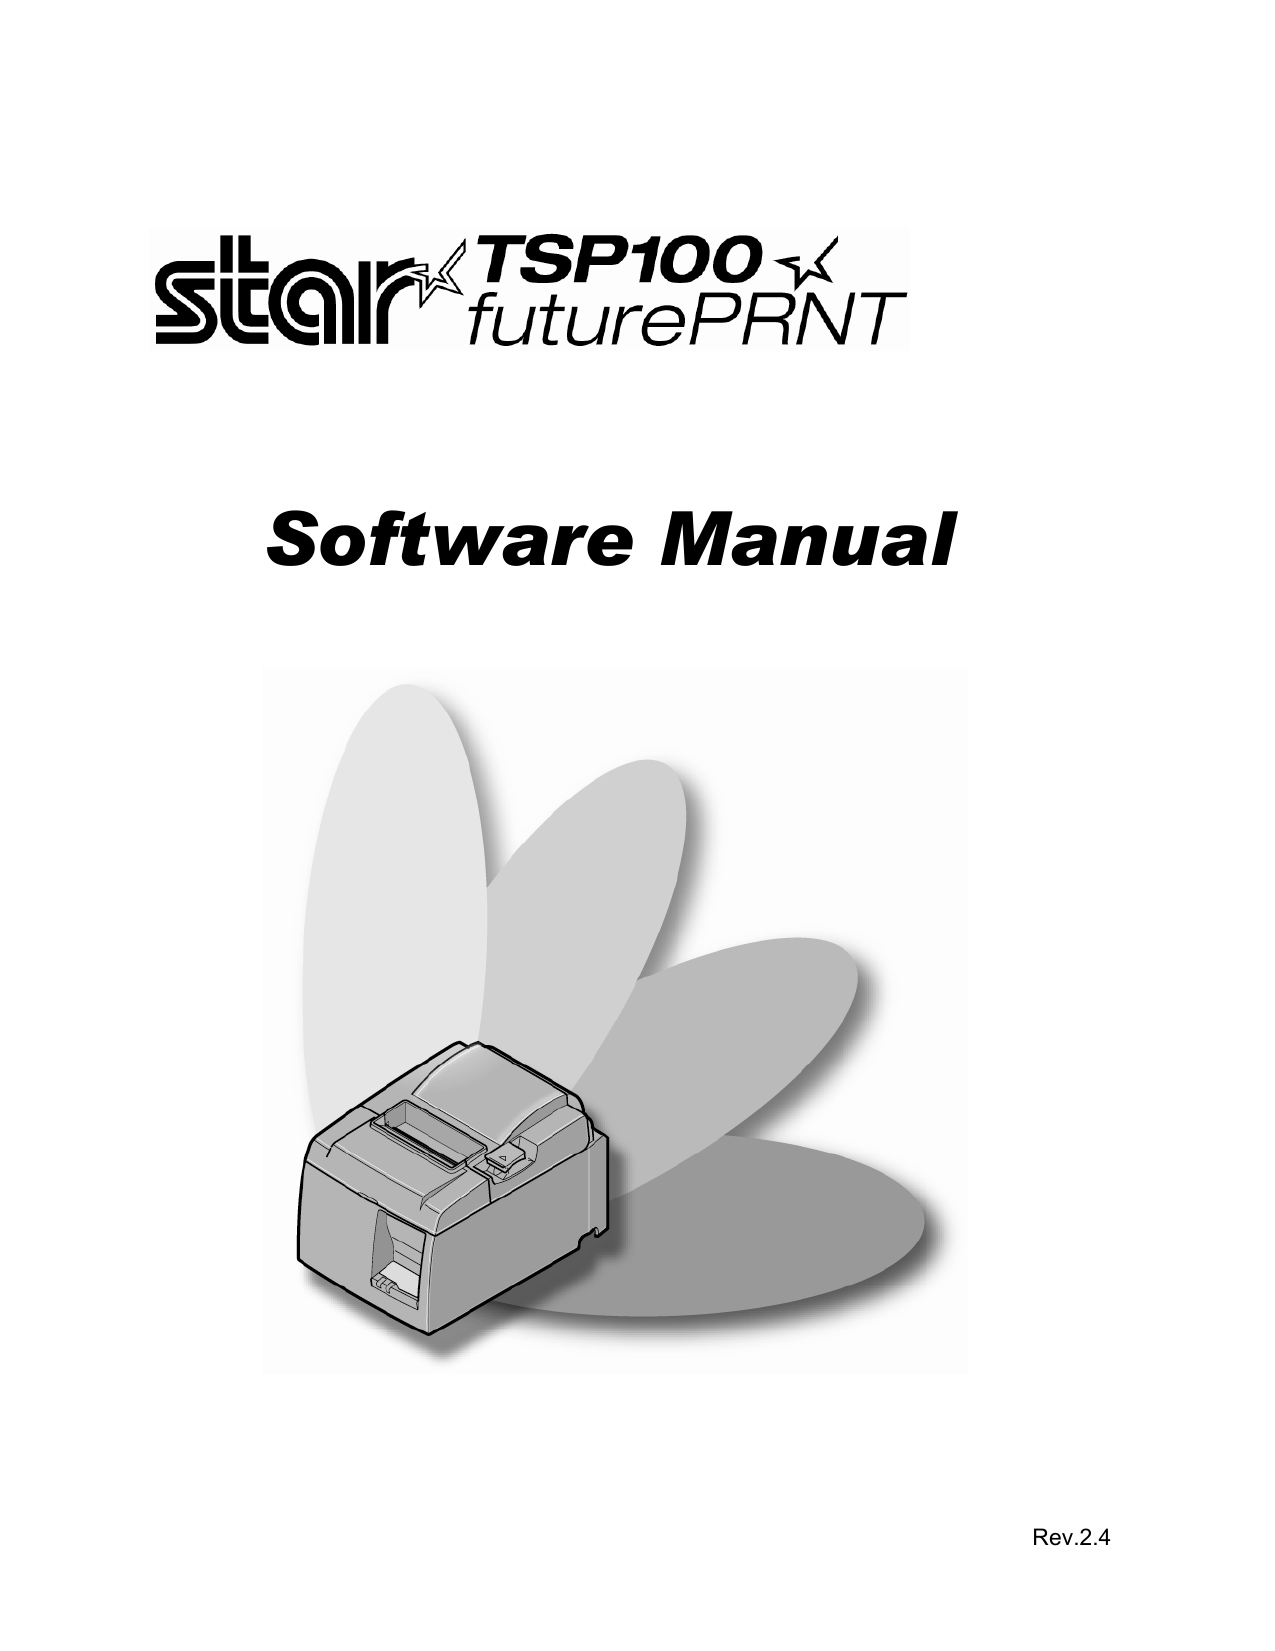 Tsp100 Software Manual Manualzz